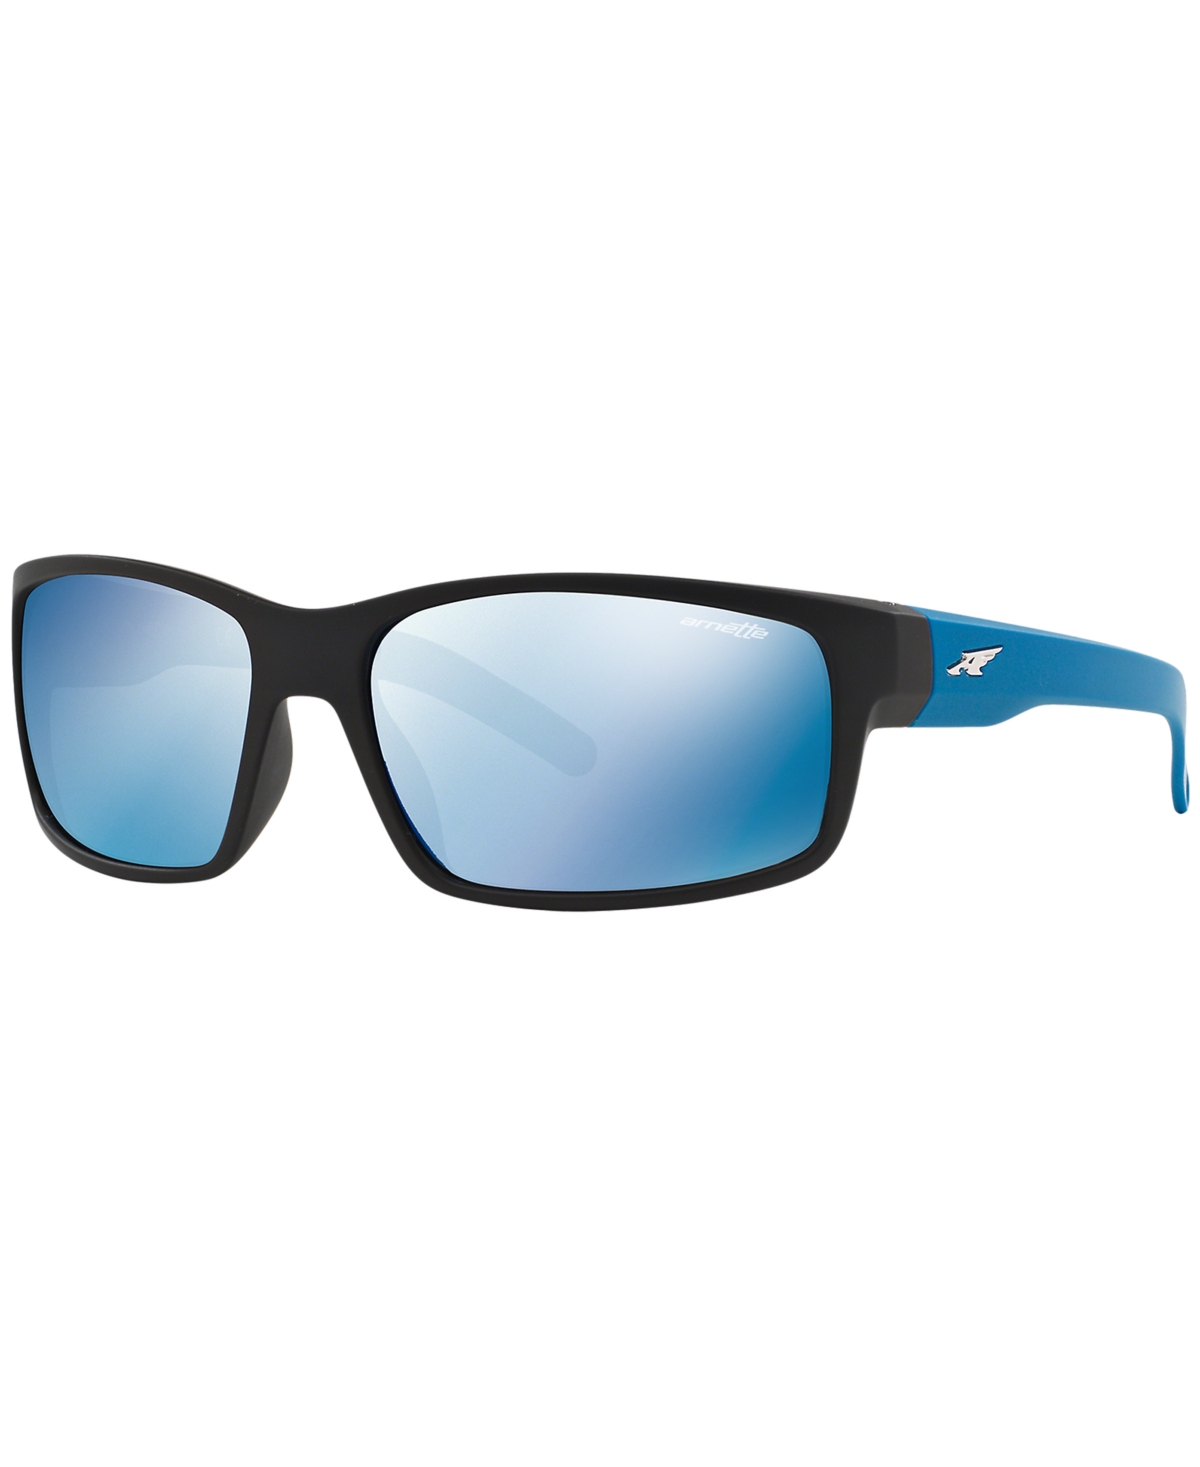 Sunglasses, AN4202 Fastball - BLACK MATTE/BLUE MIRROR